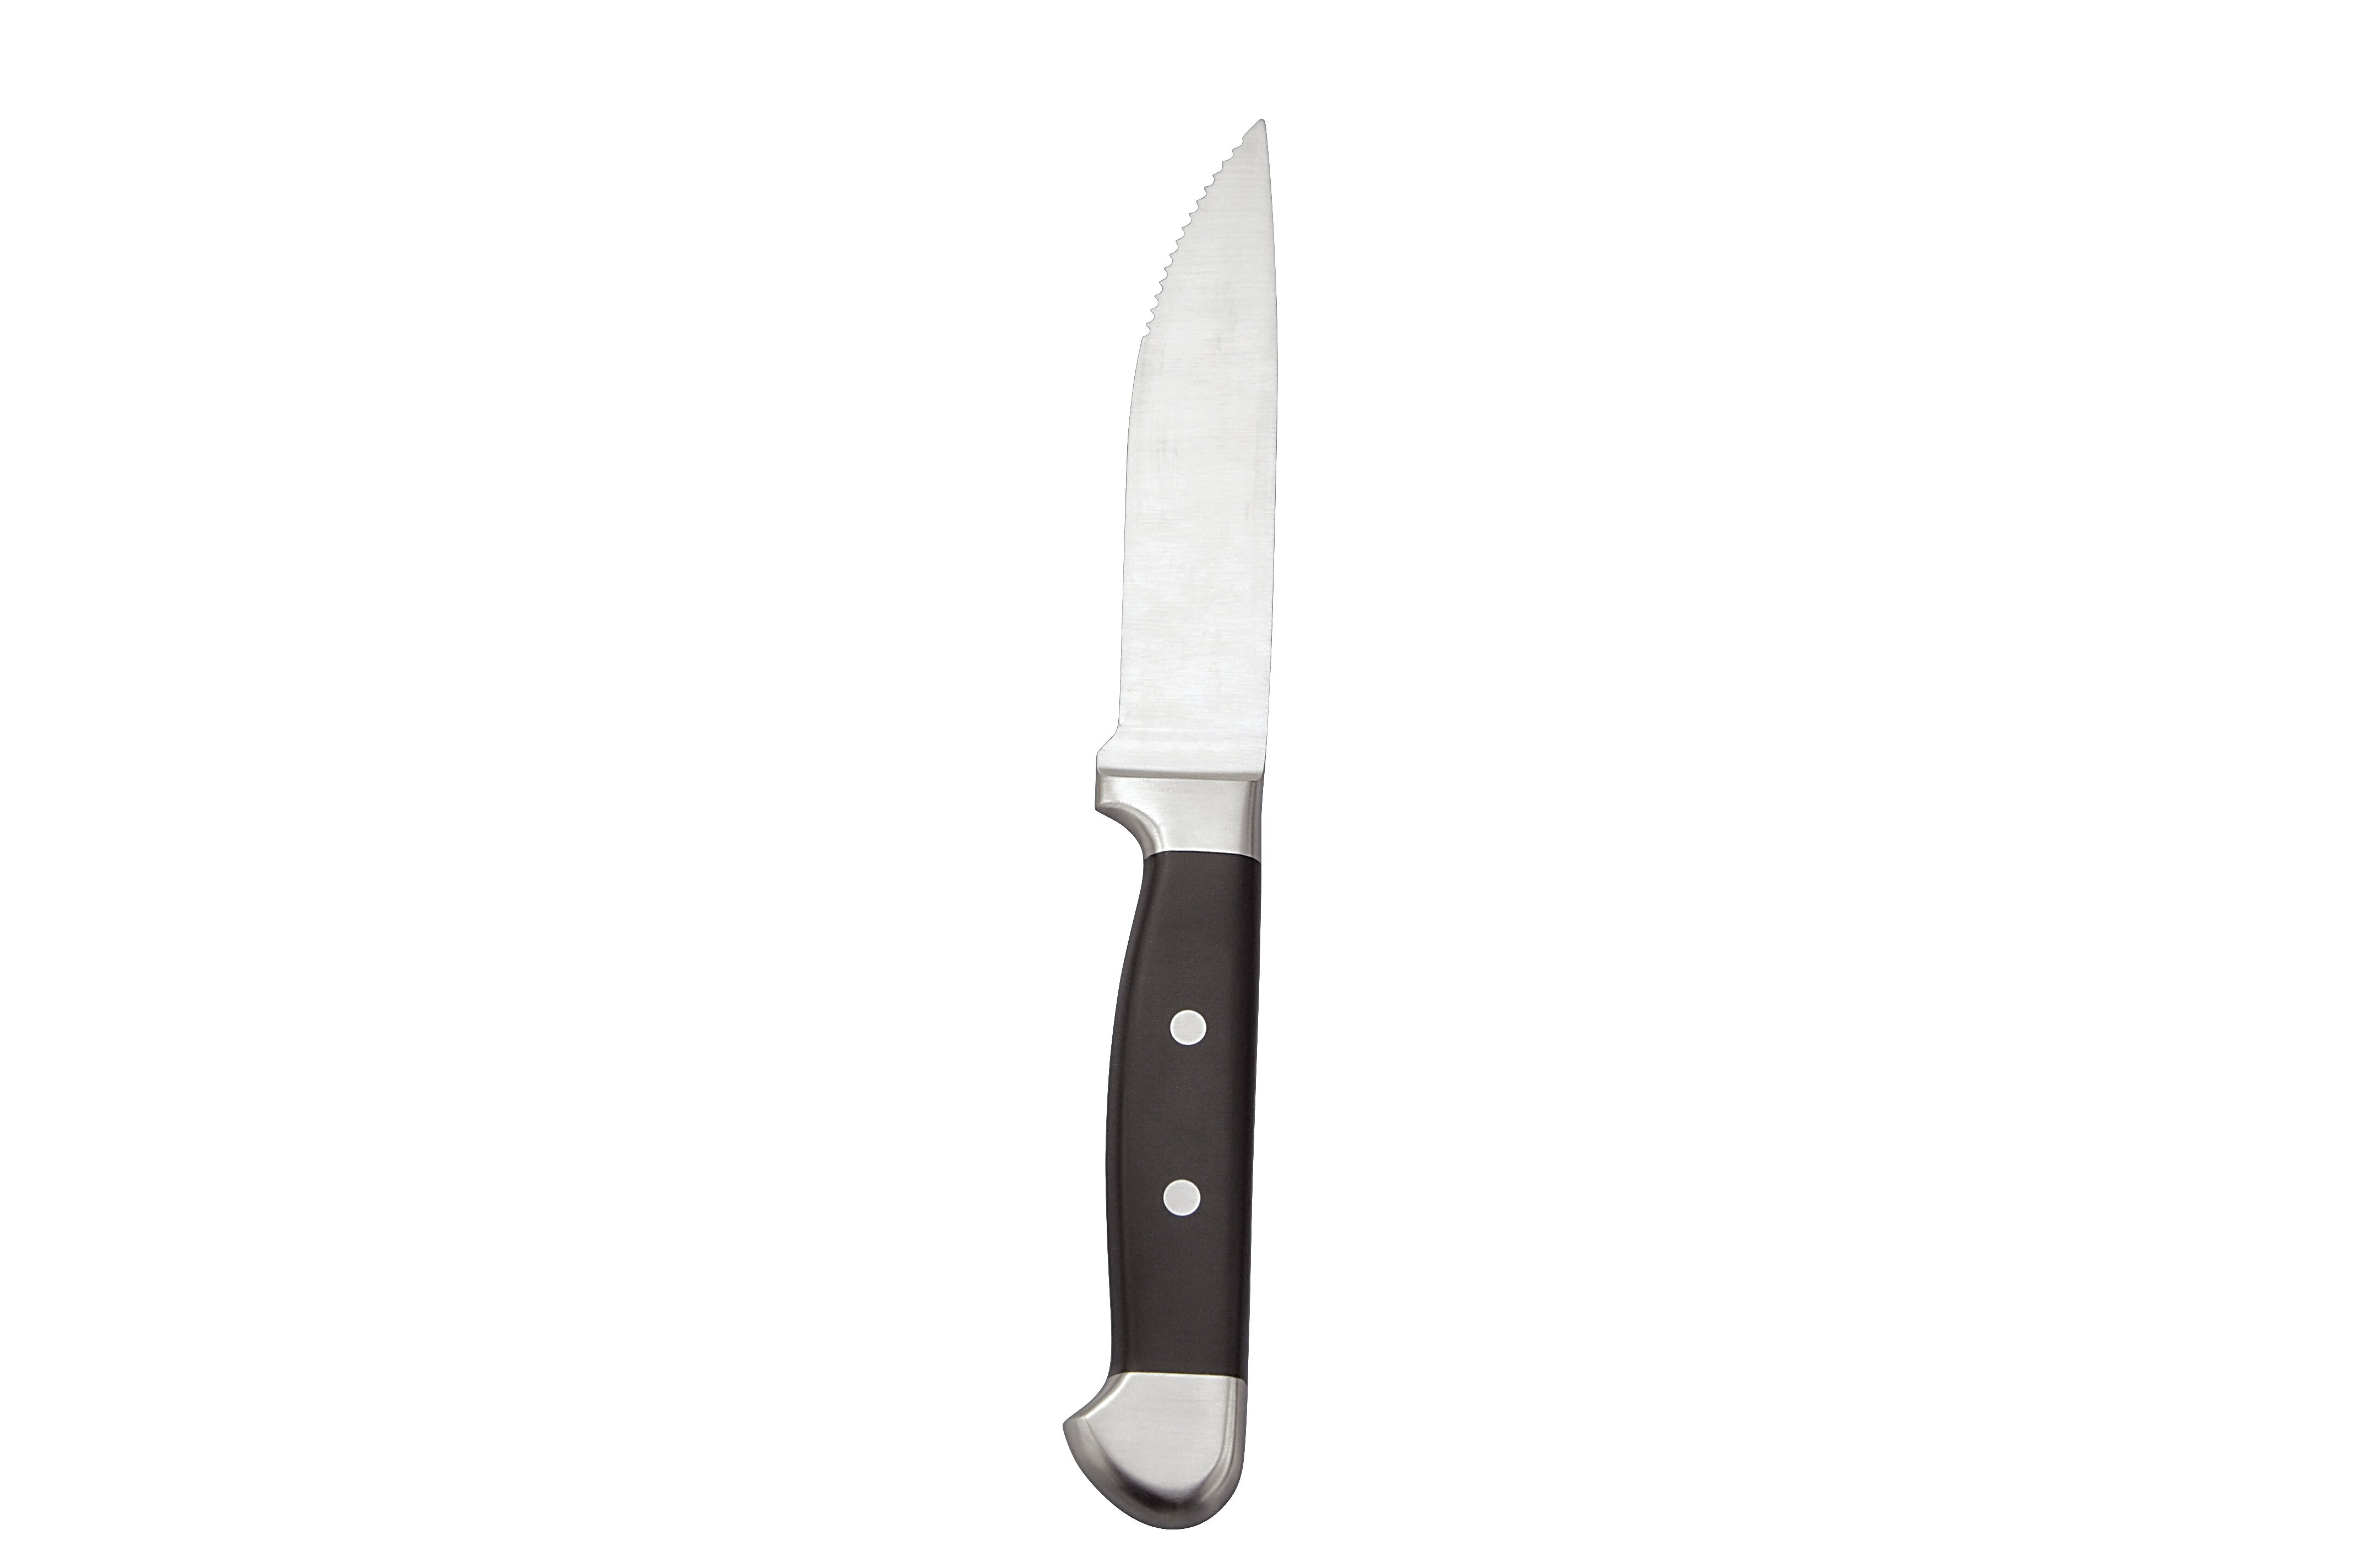 4 PIECE LONGHORN STEAKHOUSE STEAK KNIVES. WOOD HANDLES & STAINLESS